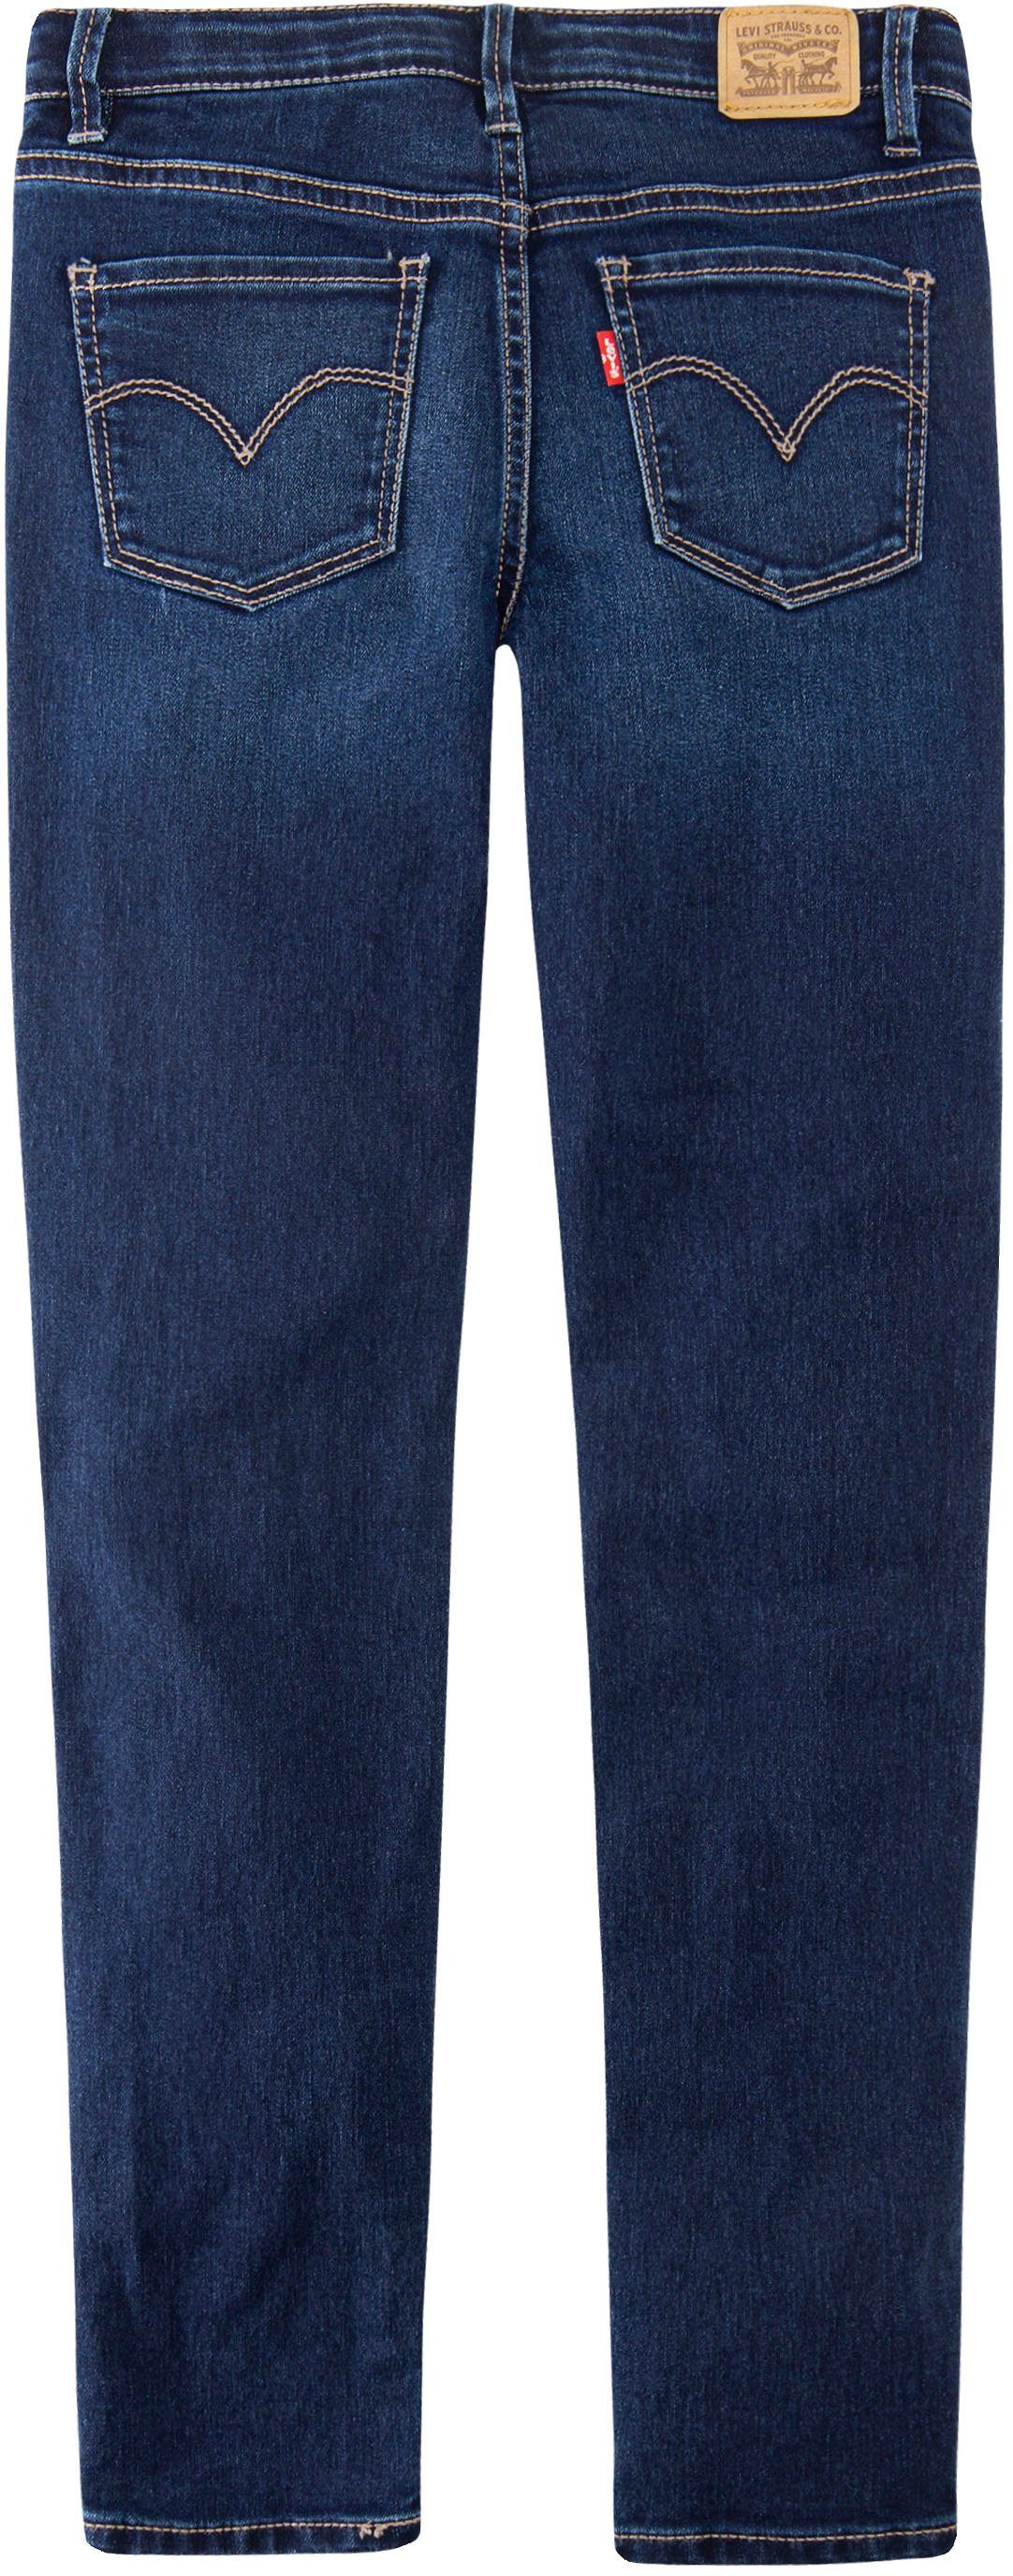 Levi's® Kids Stretch-Jeans used FIT dark for denim GIRLS SUPER 710™ blue SKINNY JEANS